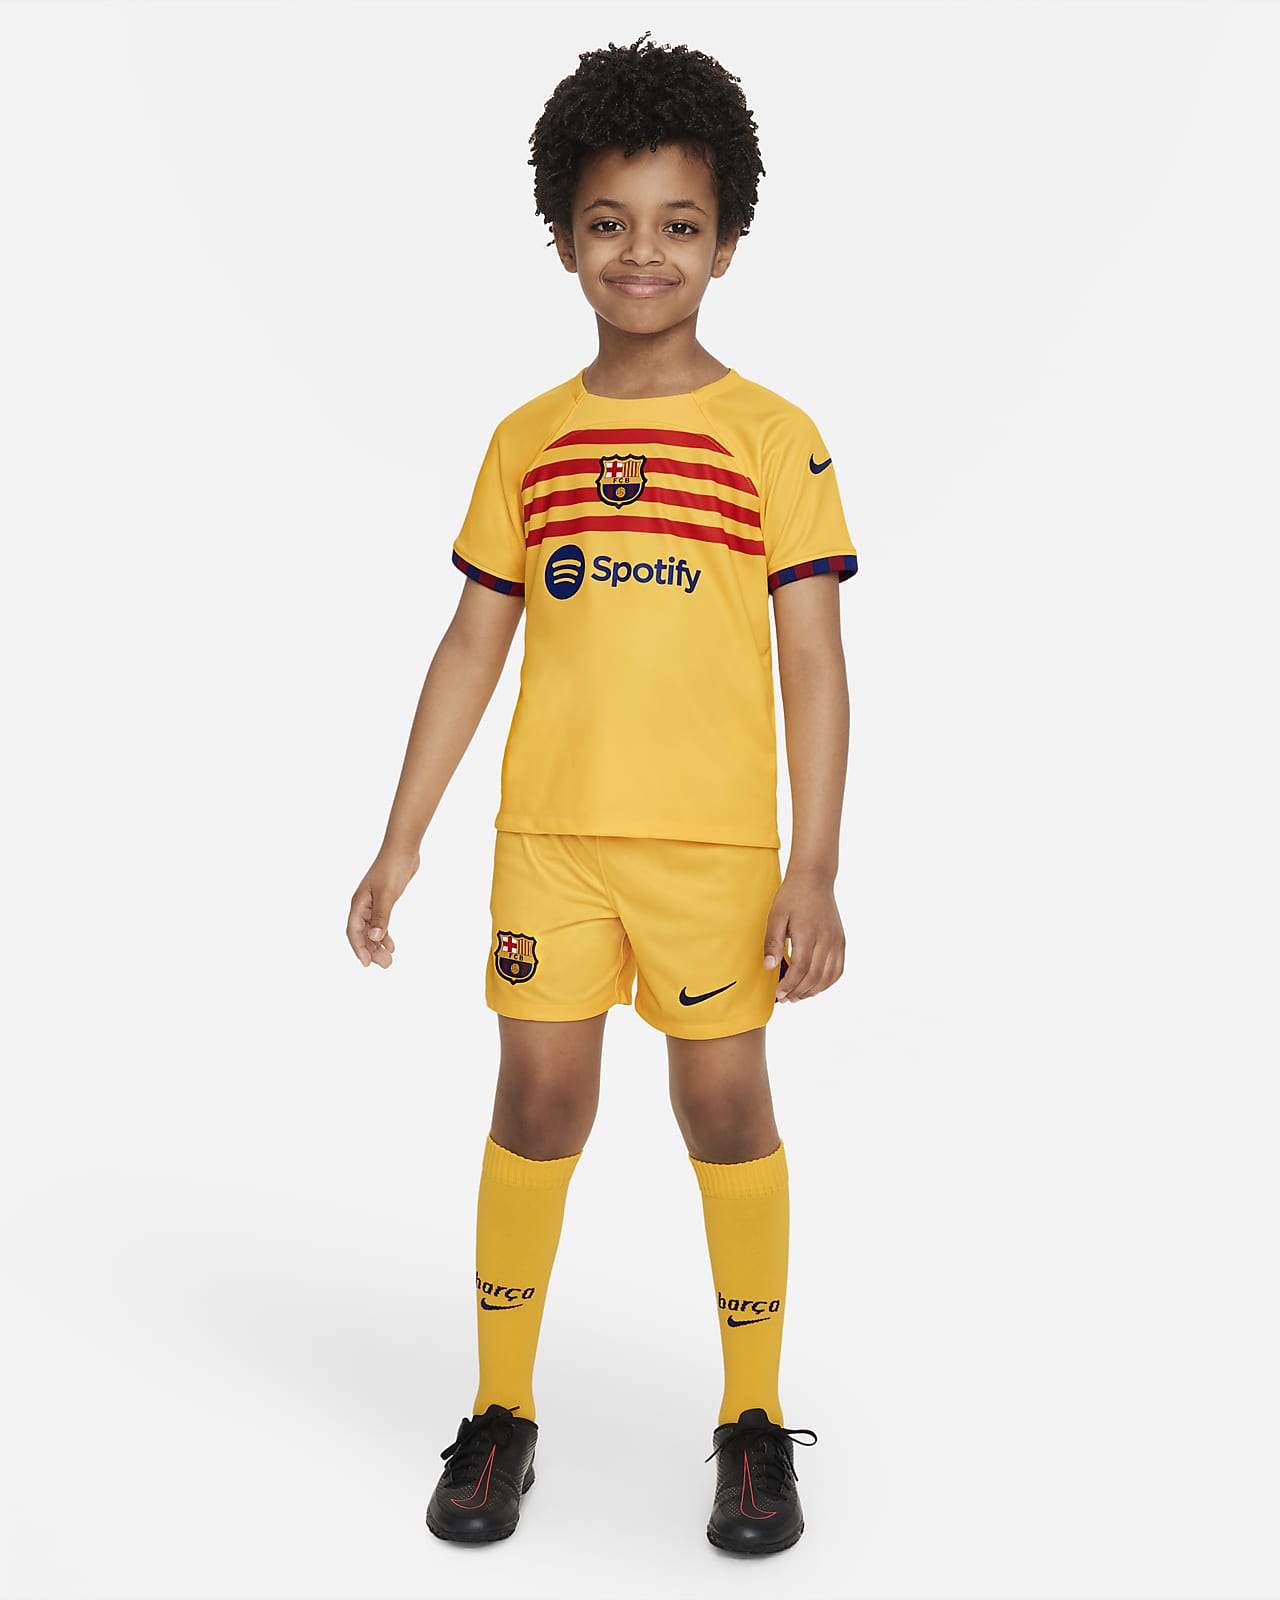 2022/23 Fourth Younger Kids' Nike Football Kit. Nike LU